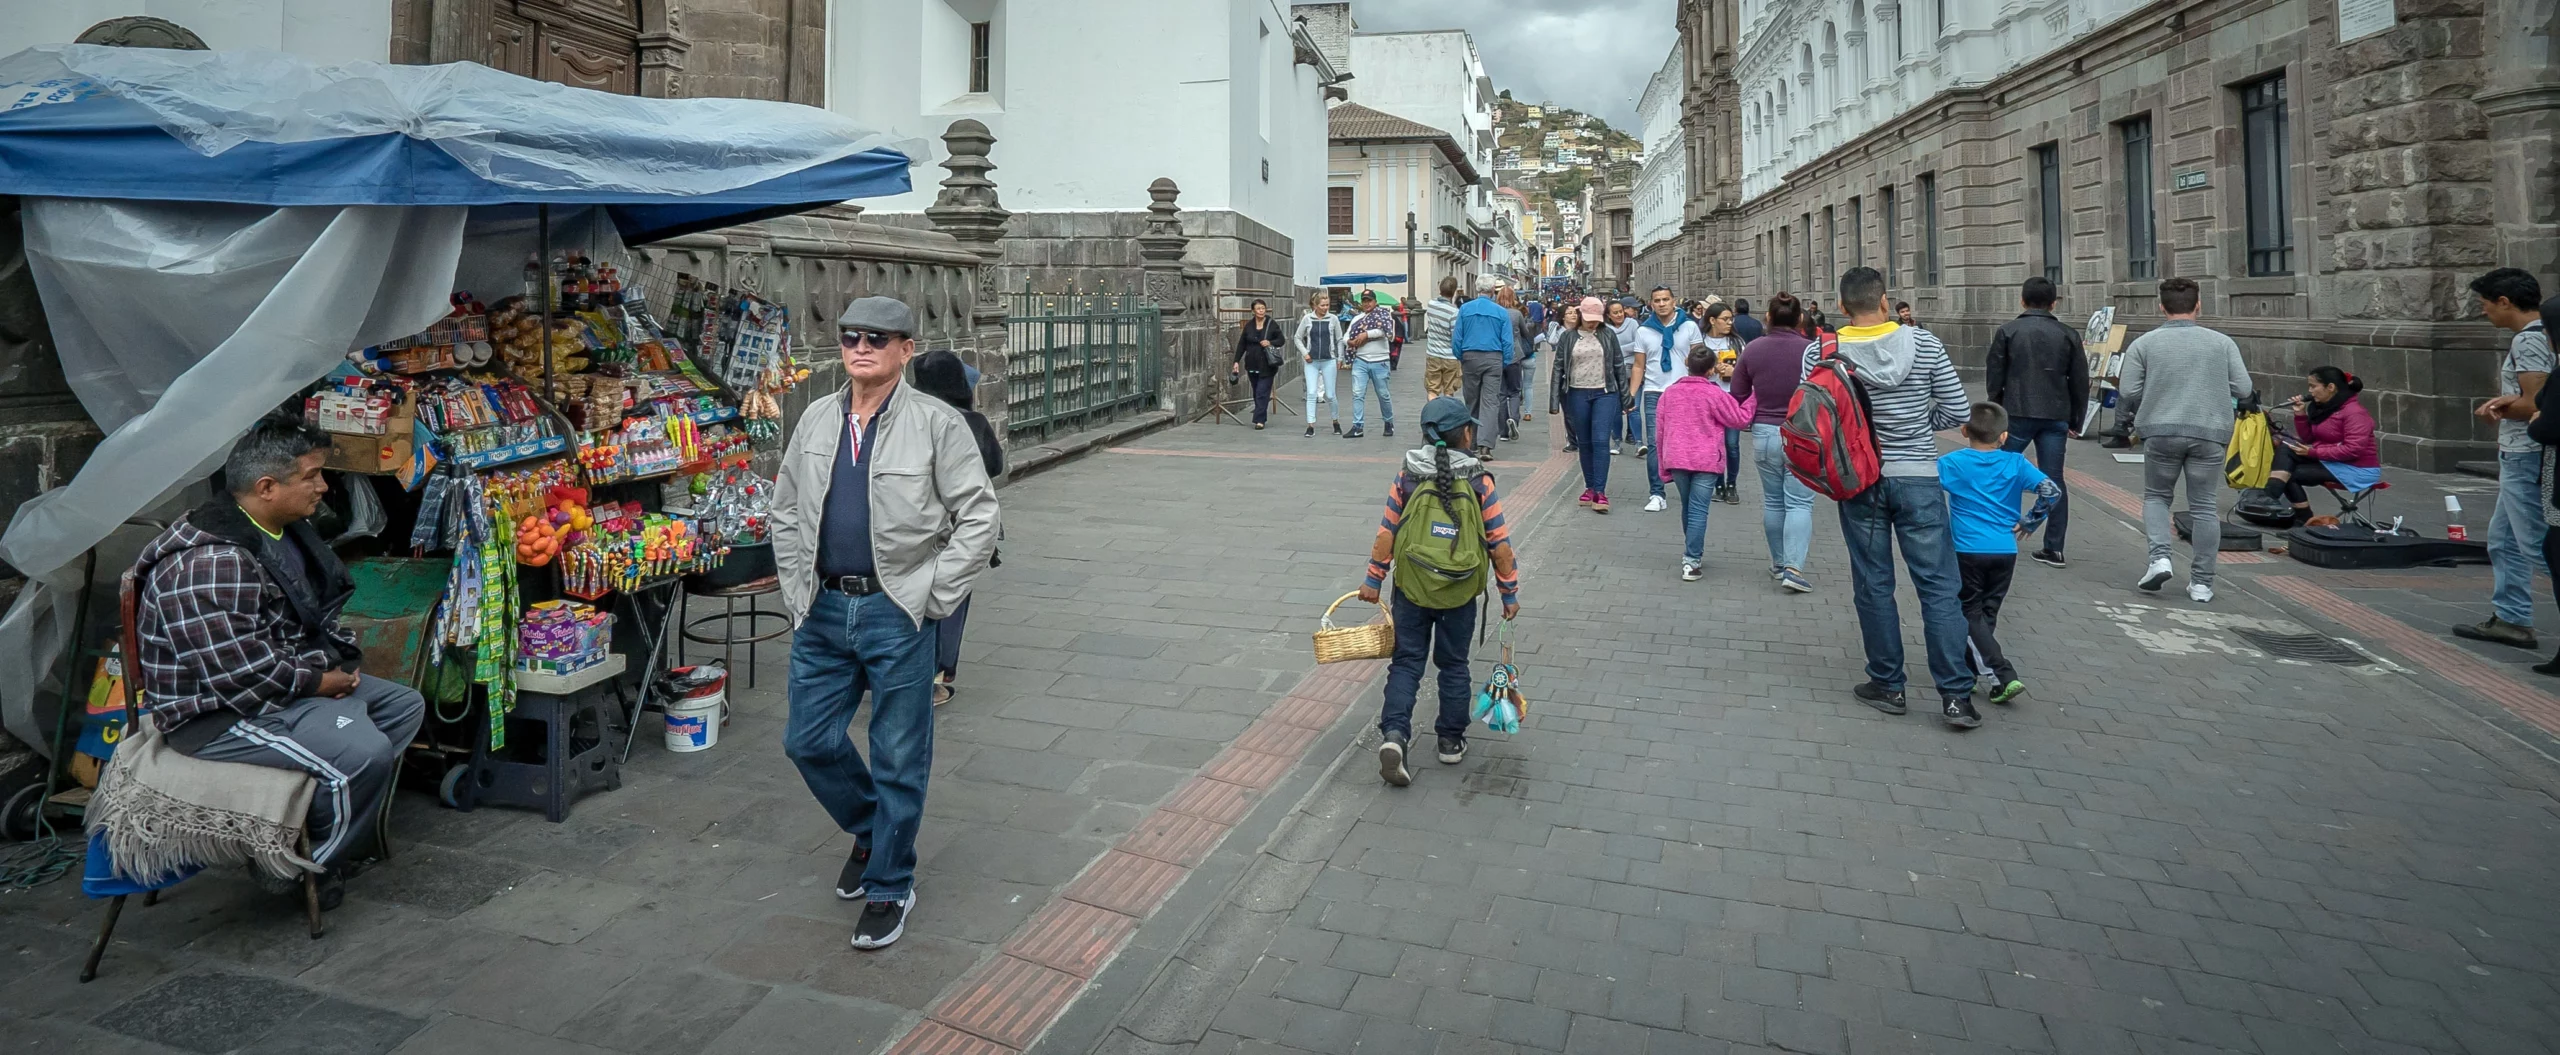 Ecuador's Key Legal Reform Vote on April 21 - Quito. (Photo Internet reproduction)